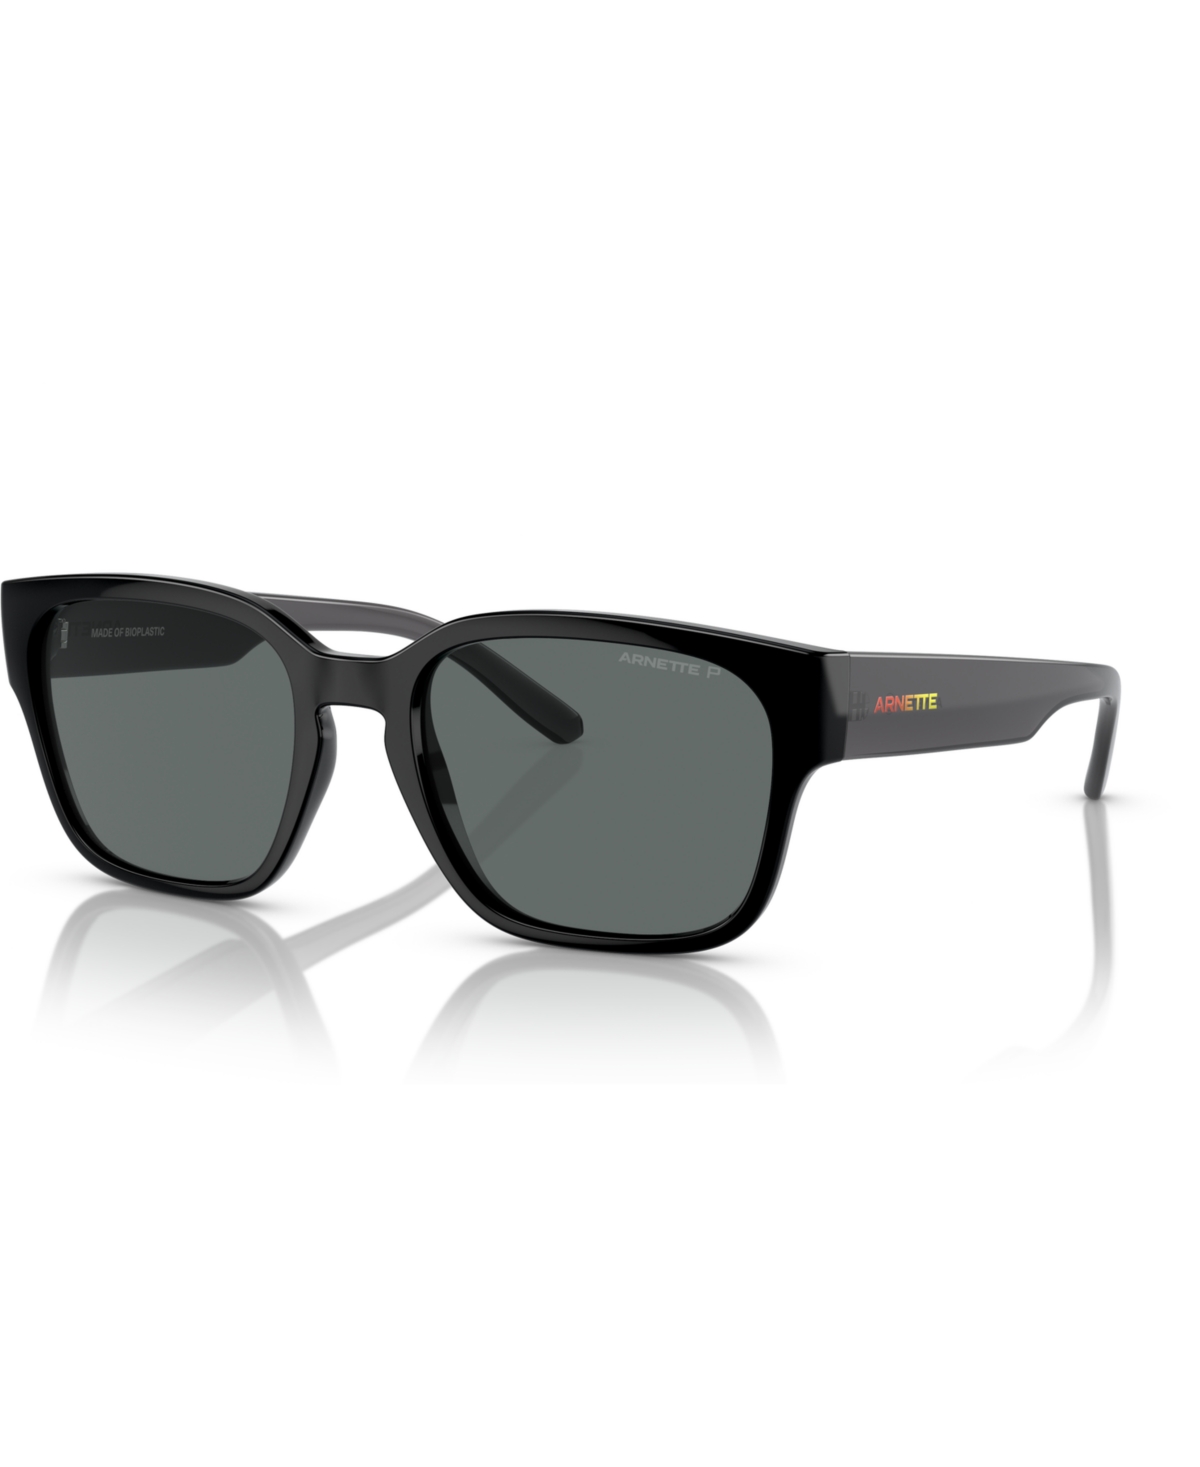 Men's Hamie Polarized Sunglasses, Polar AN4325 - Black